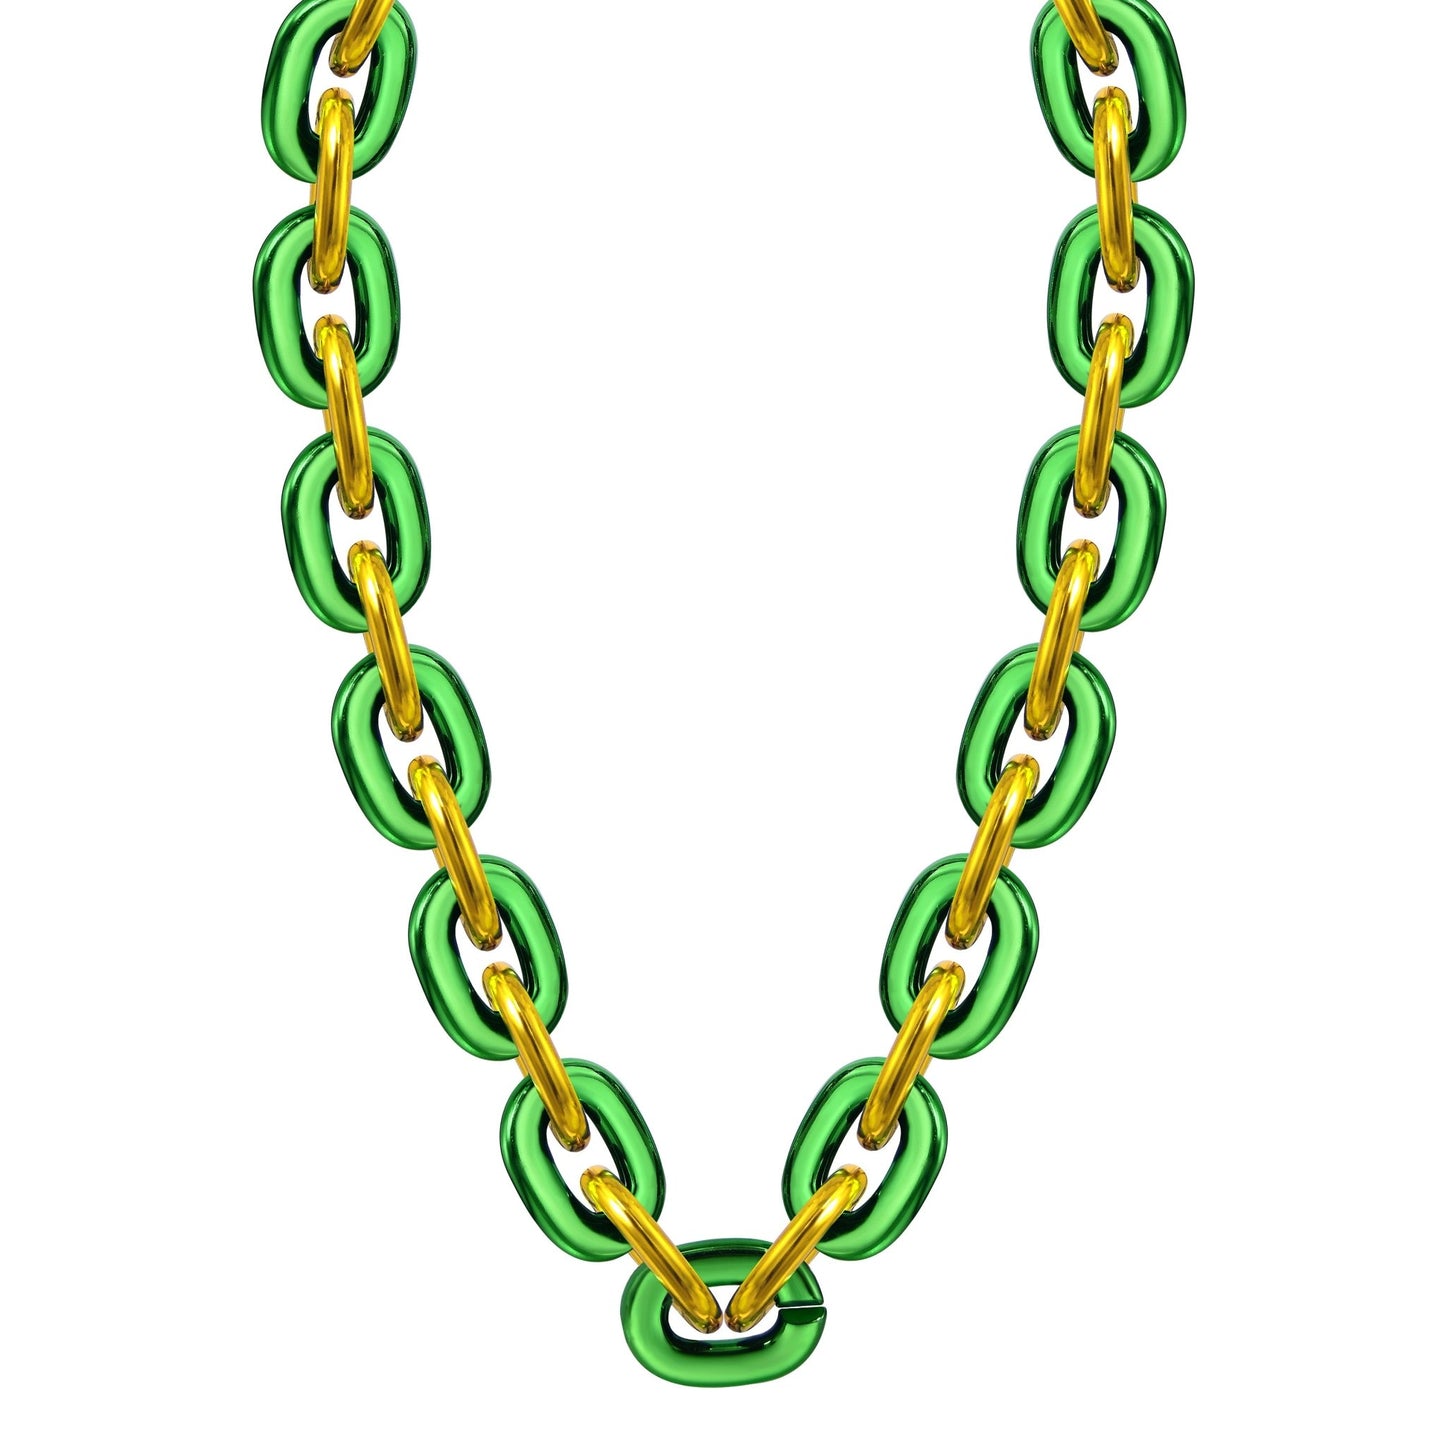 Jumbo Fan Chain Necklace - Gamedays Gear - Green / Gold